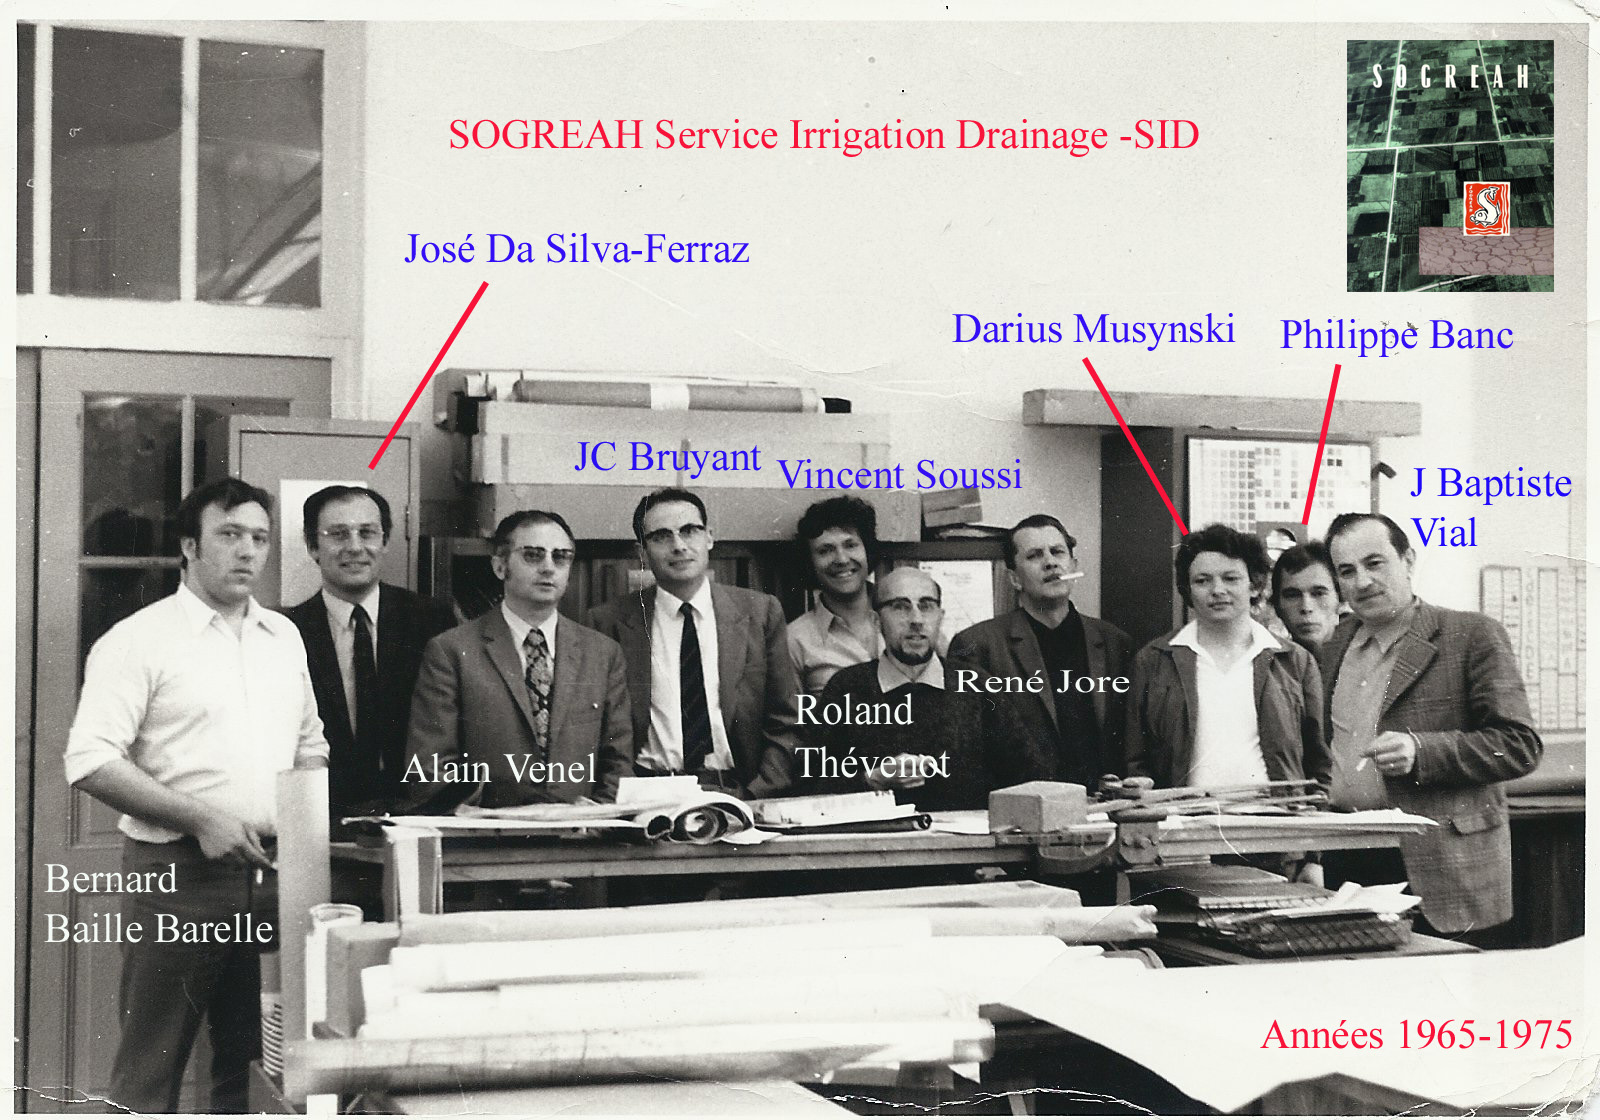 1965 equipe projet sogreah beauvert noms